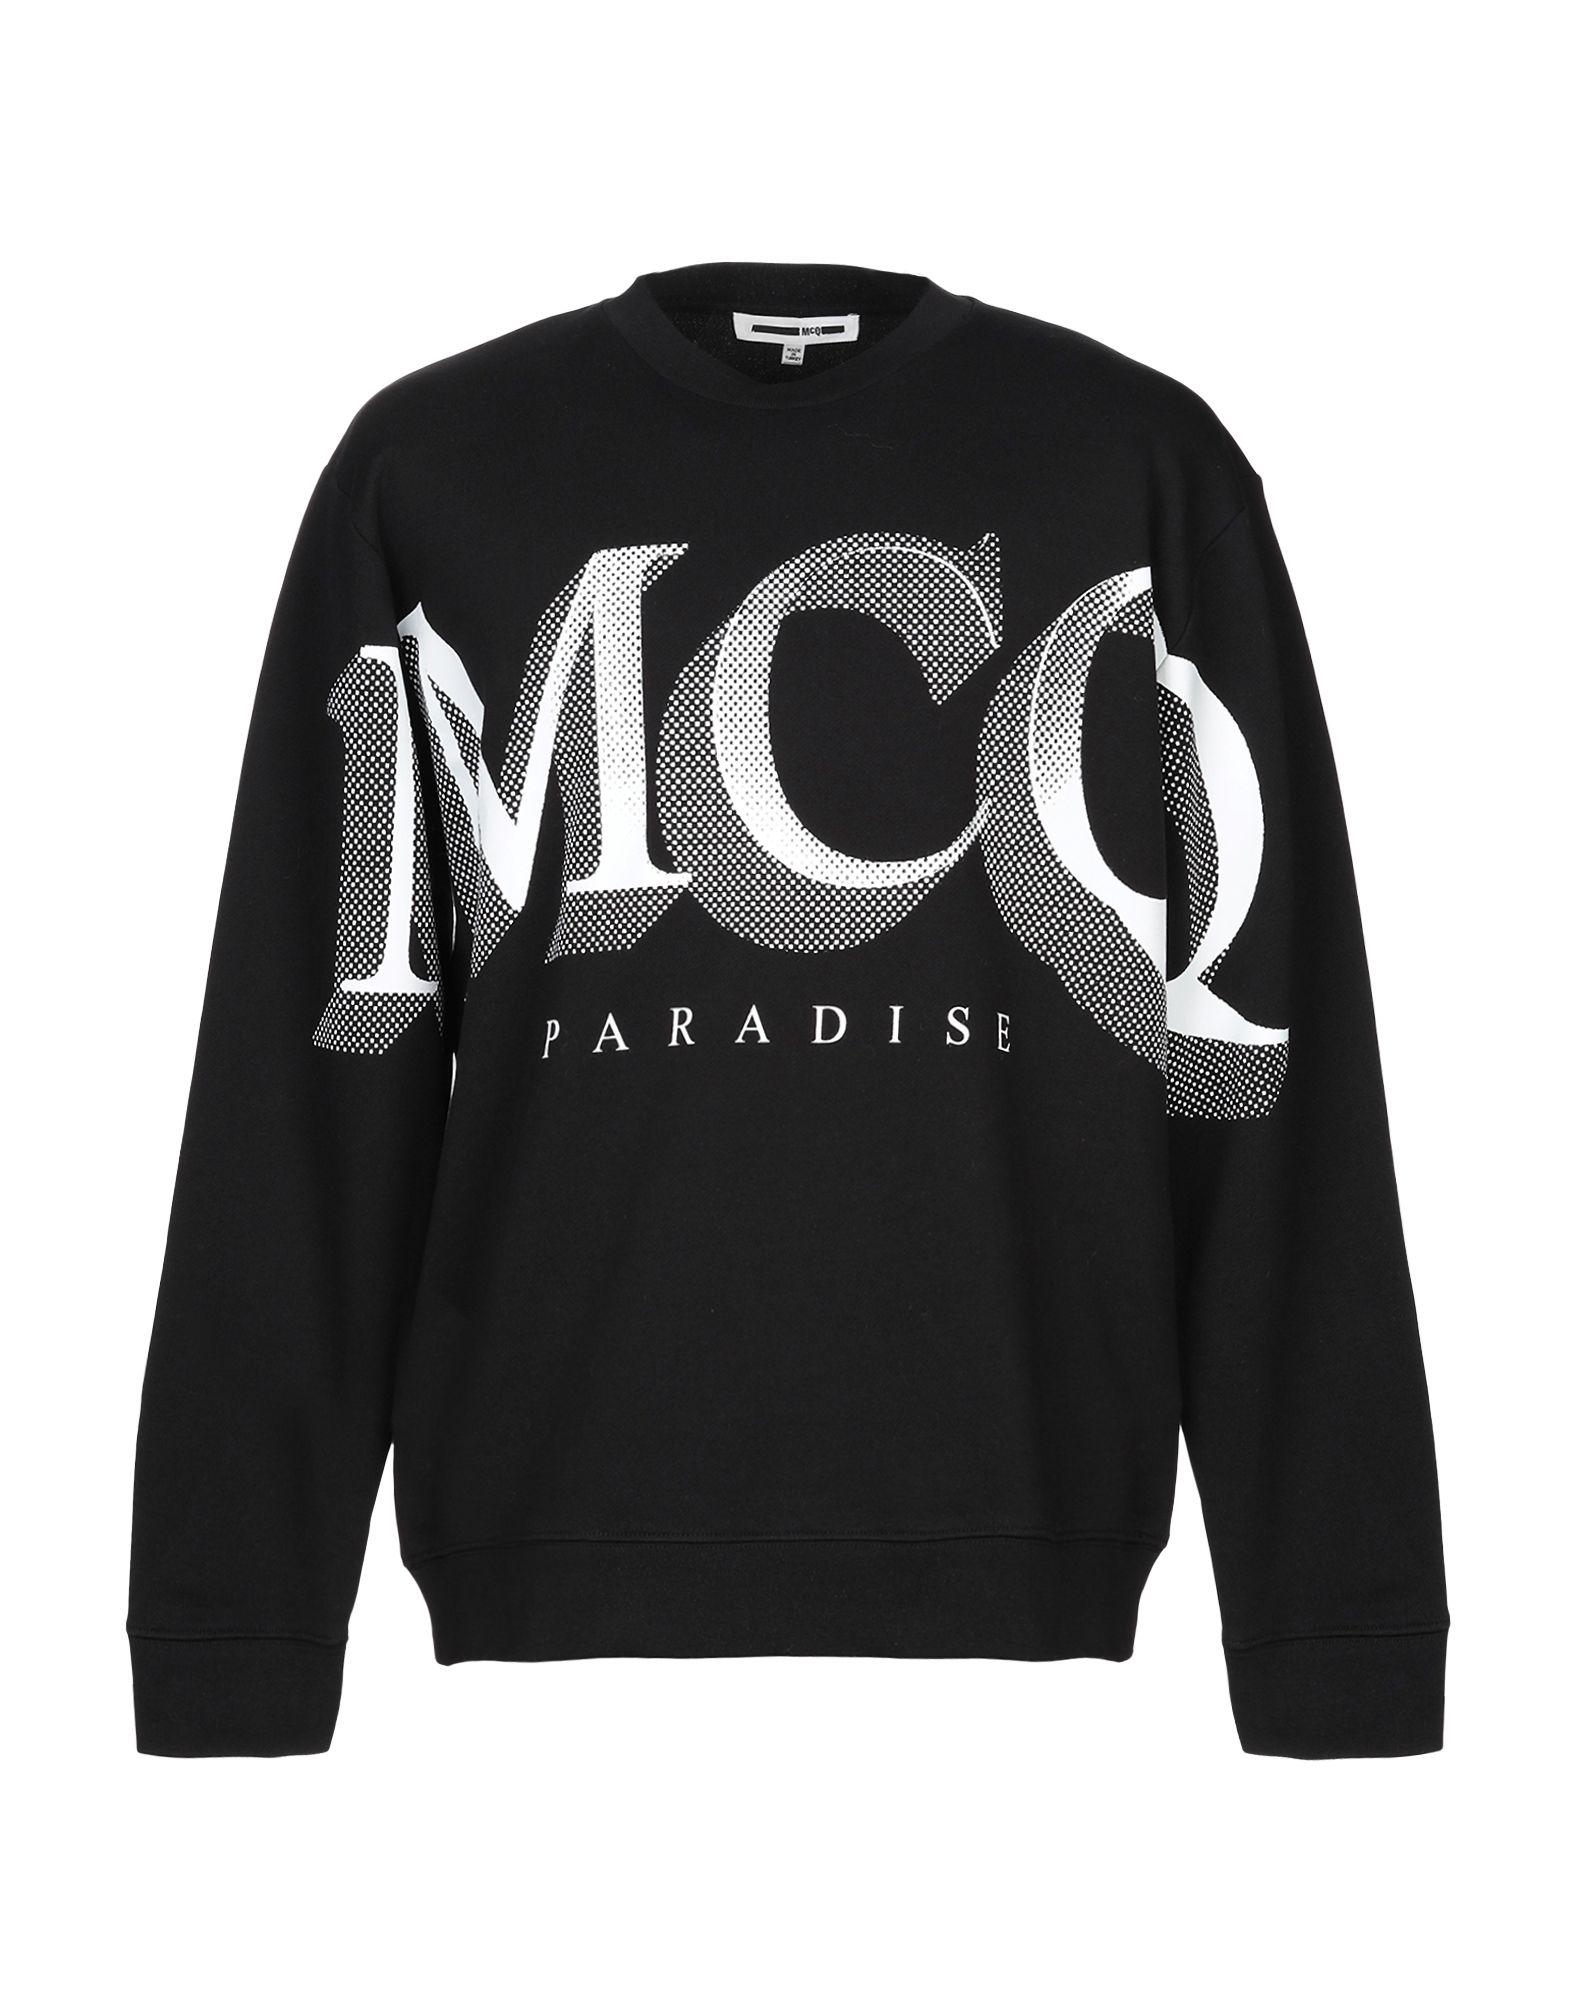 McQ Sweatshirt in Black for Men - Lyst